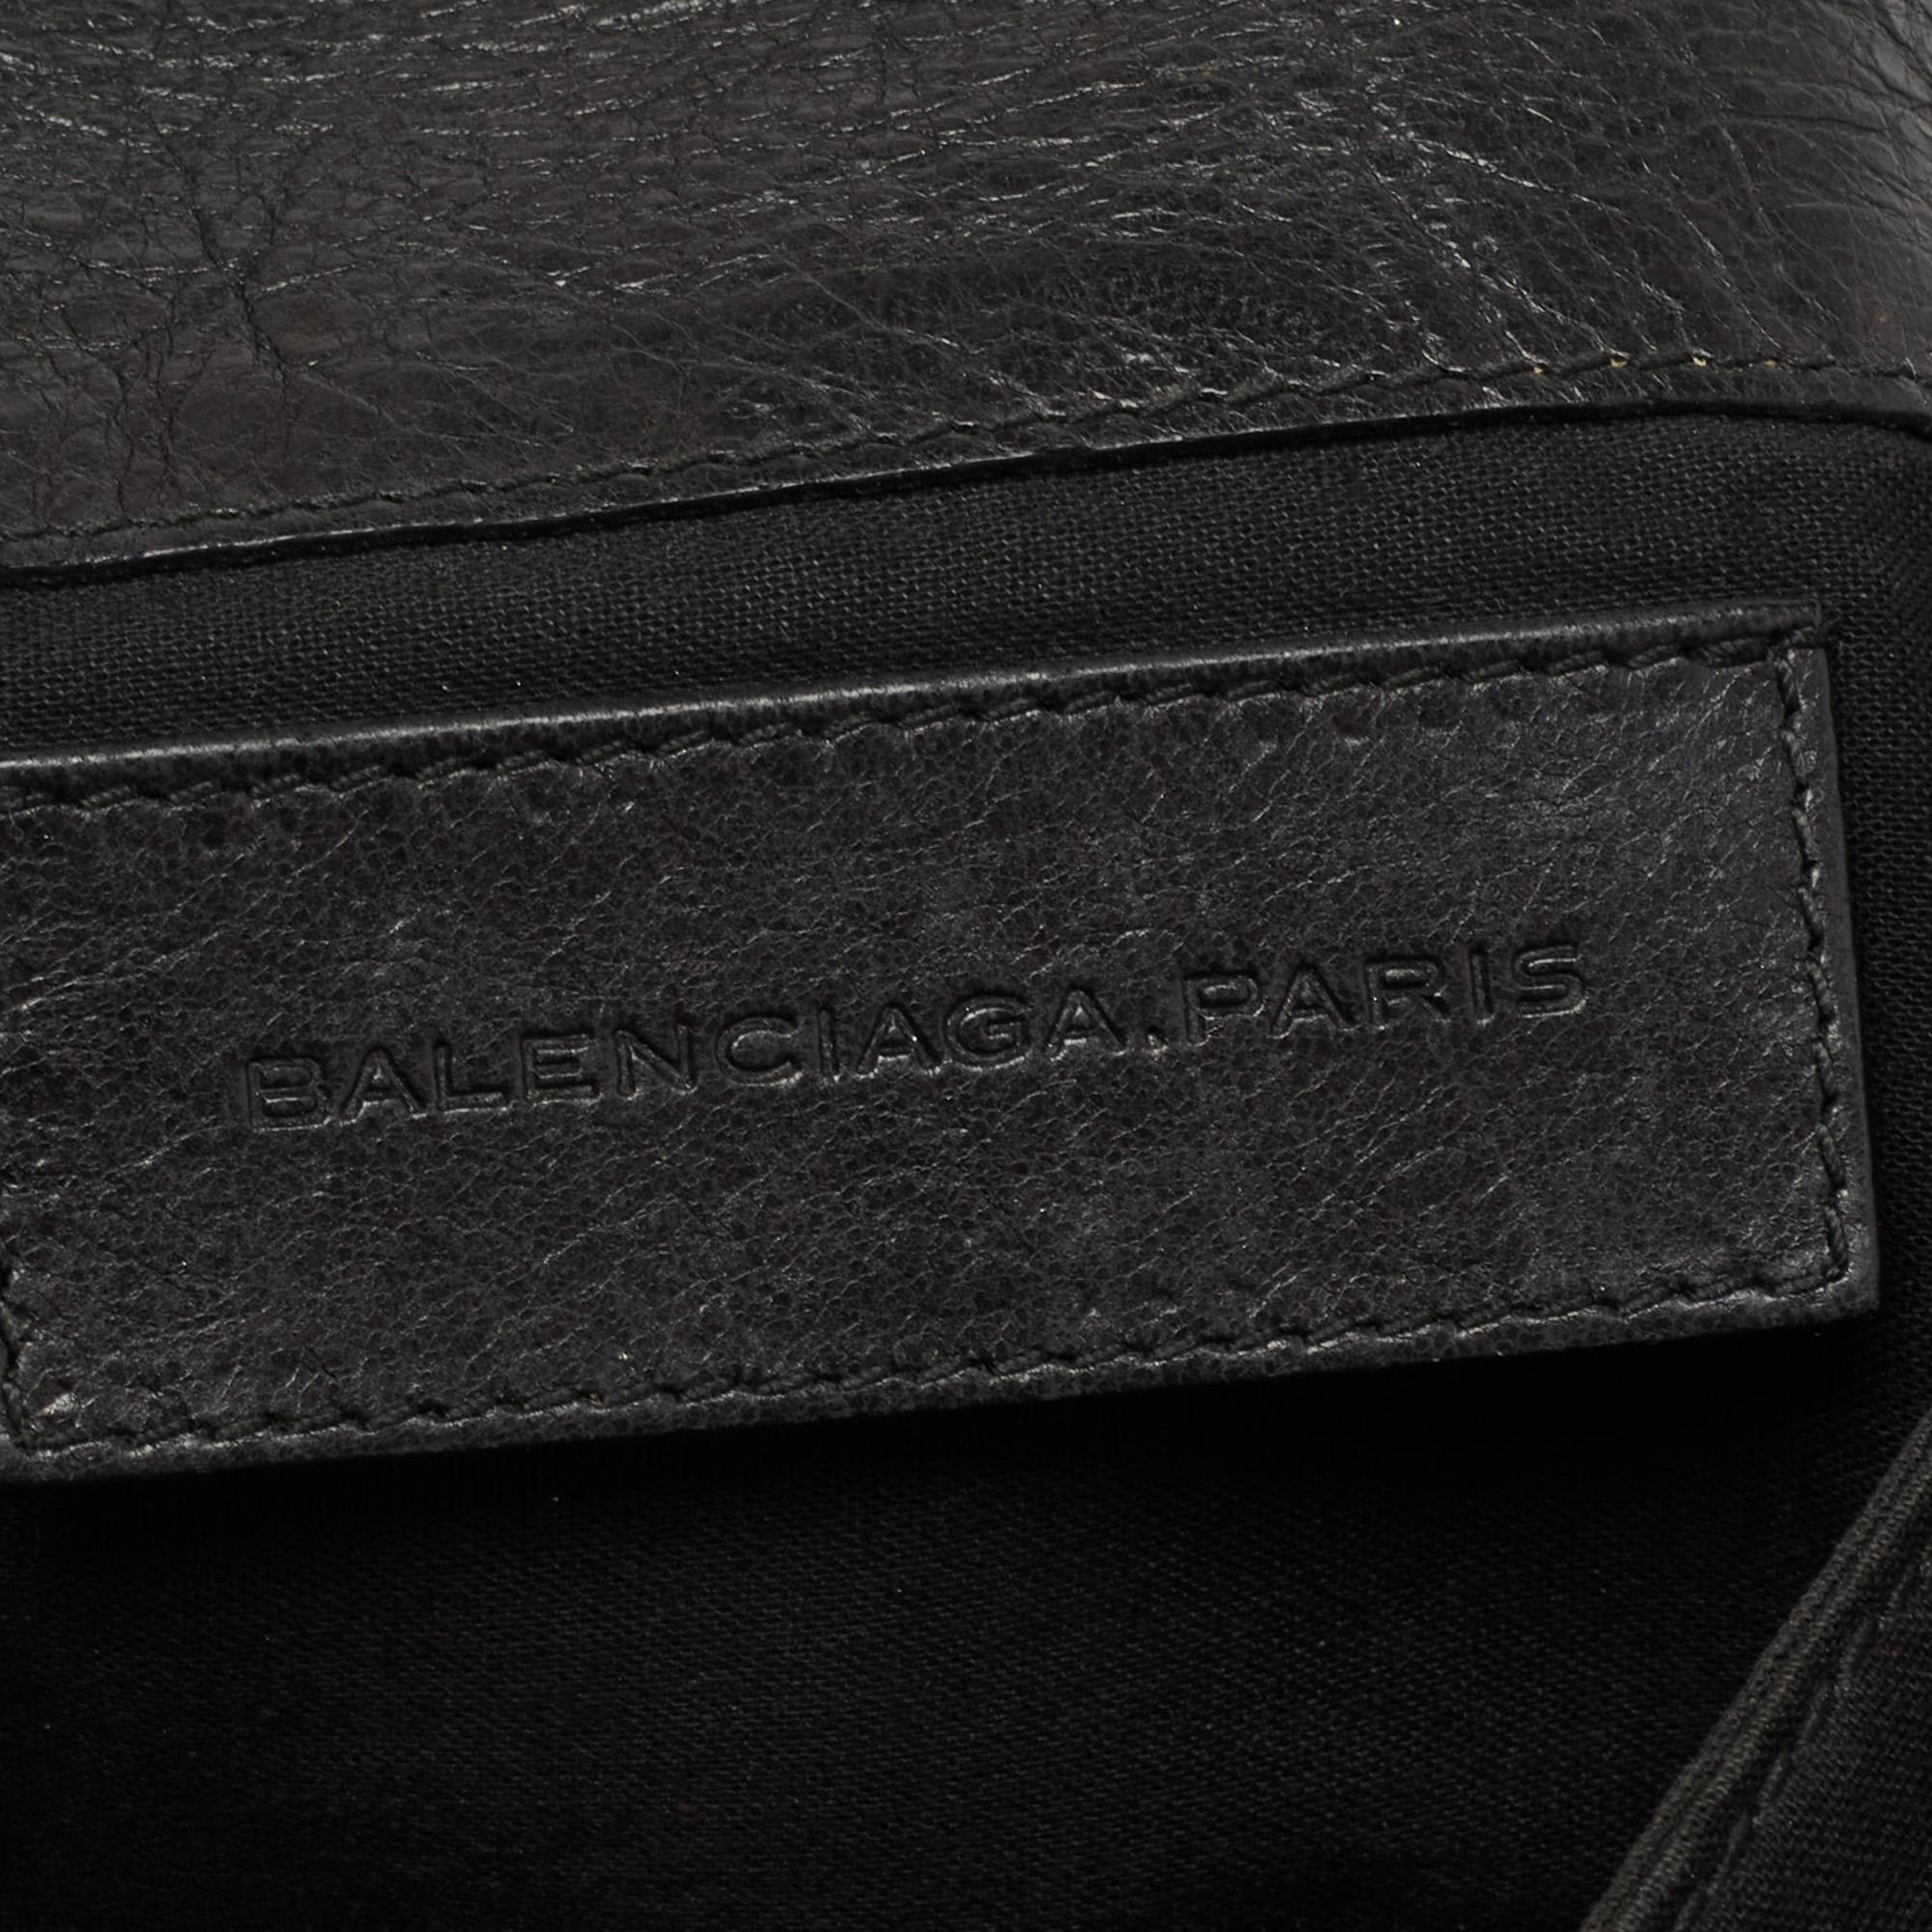 Balenciaga Black Leather GGH Envelope Clutch 3